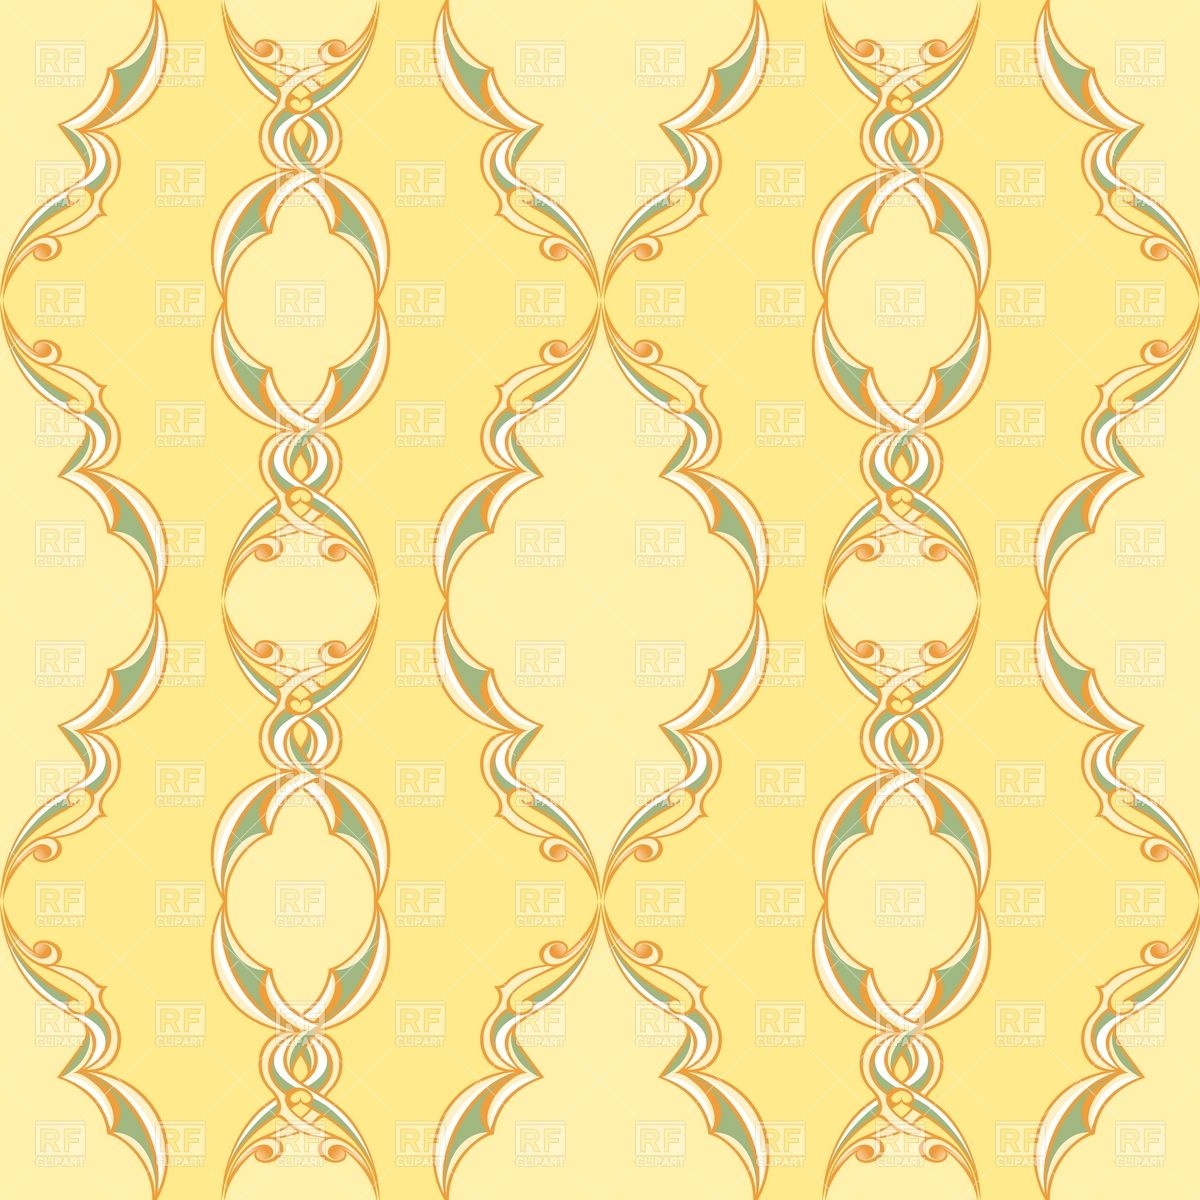 Free download Vintage wallpaper pattern Vector Image of.